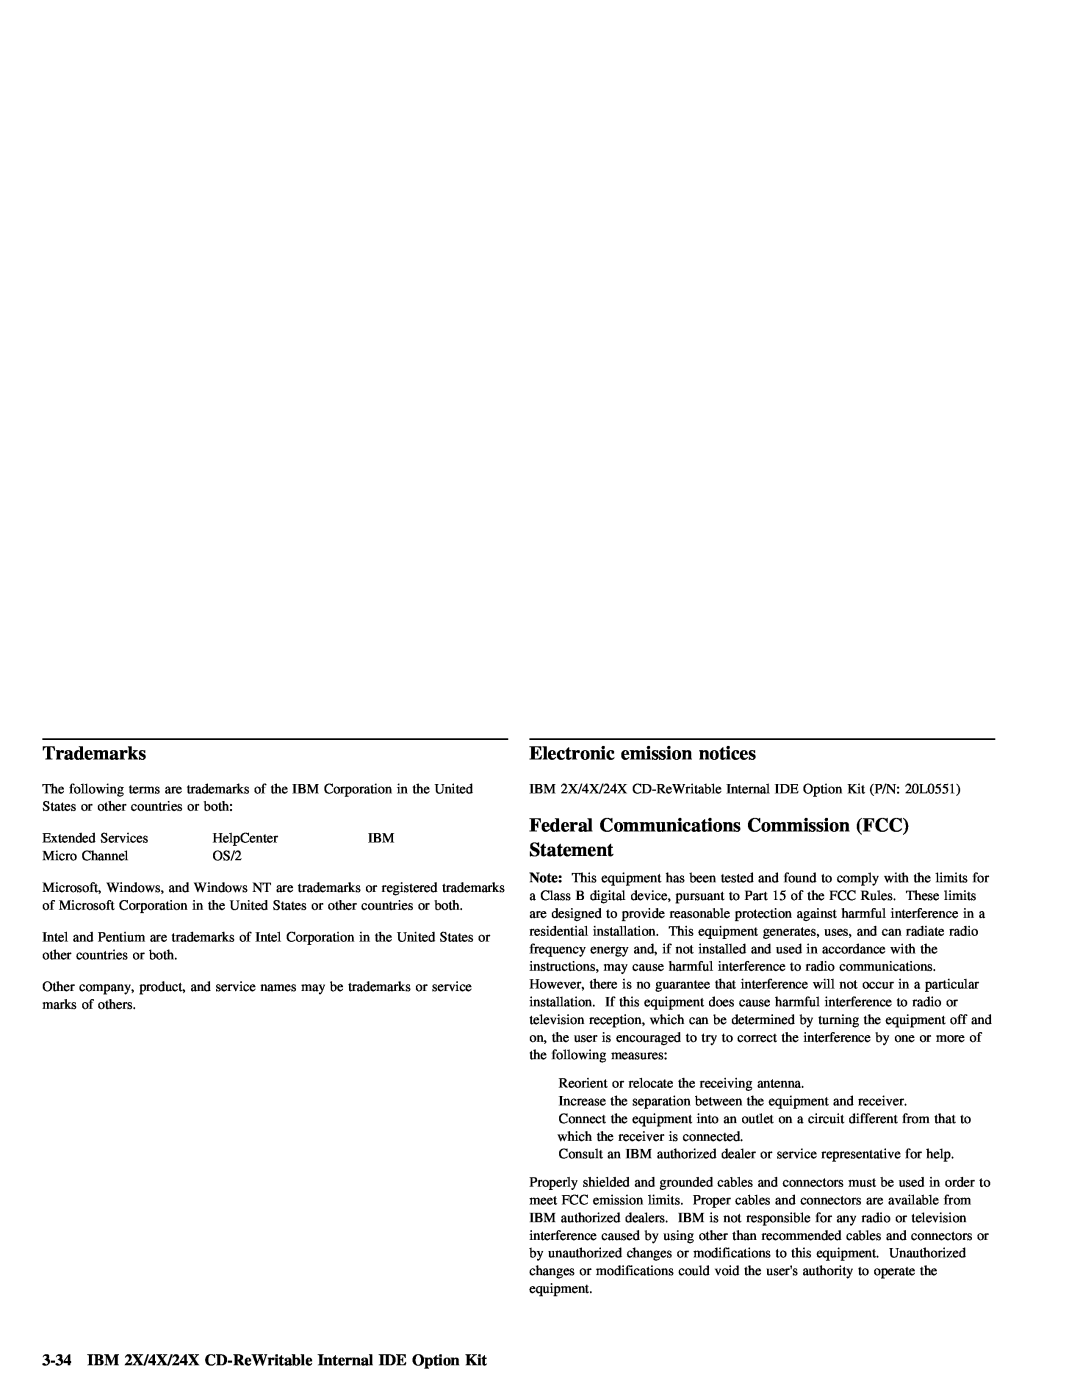 IBM 28L2234 manual notices, emission, Electronic, Statement 